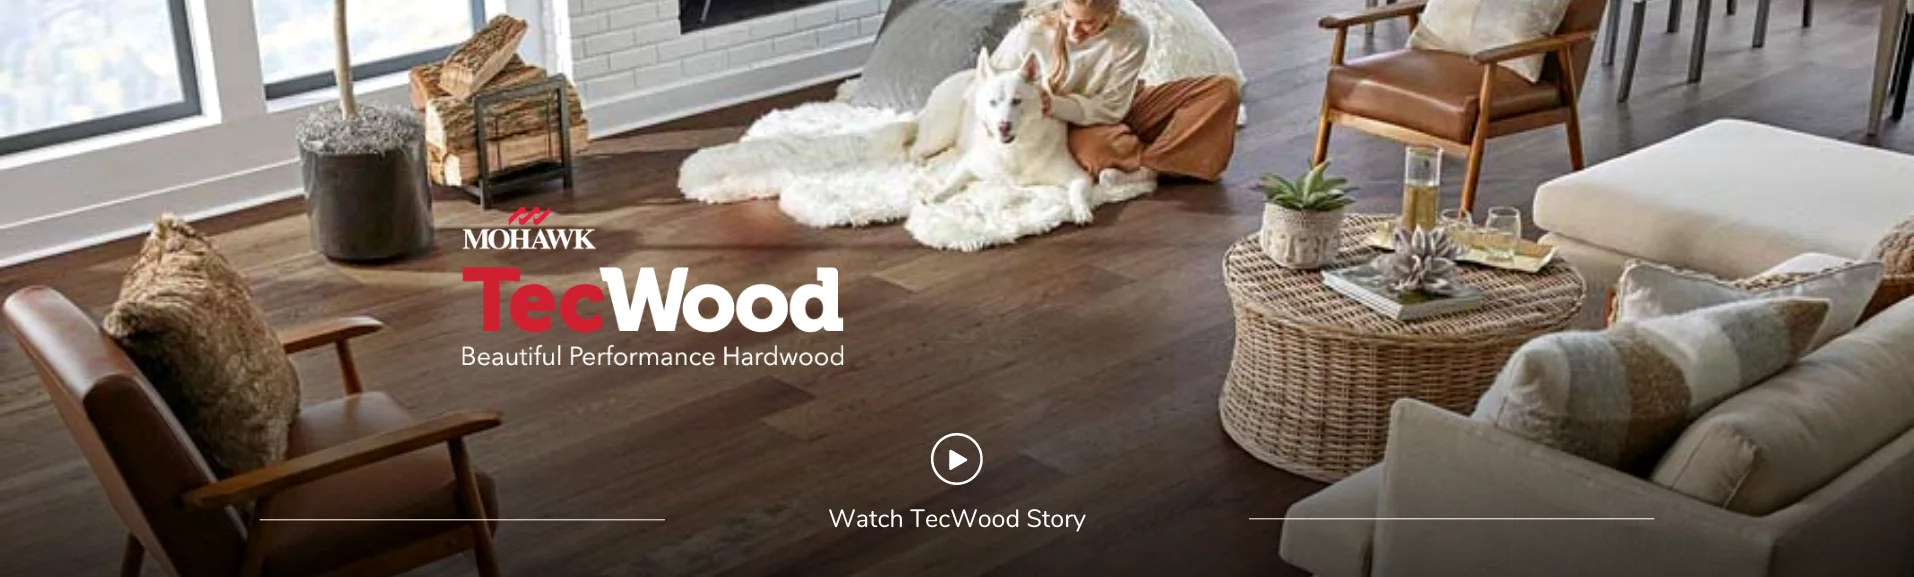 Tecwood - Beautiful Performance Hardwood watch video